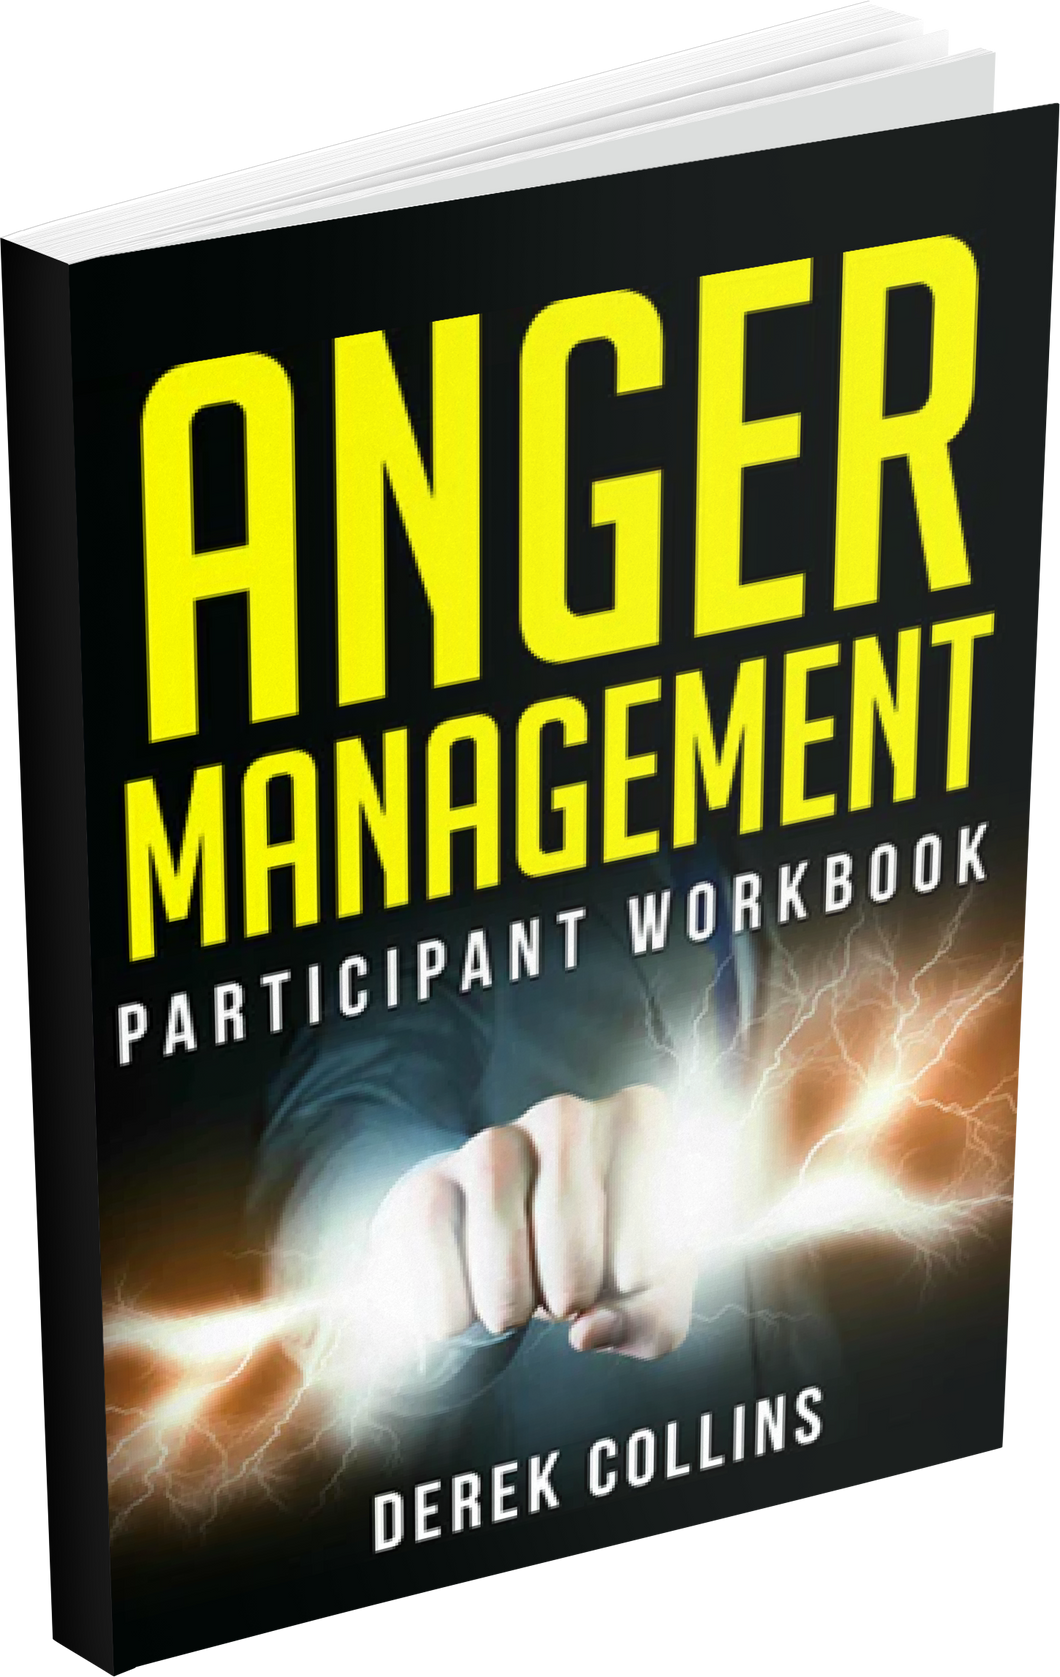 Anger Management Participant Workbook